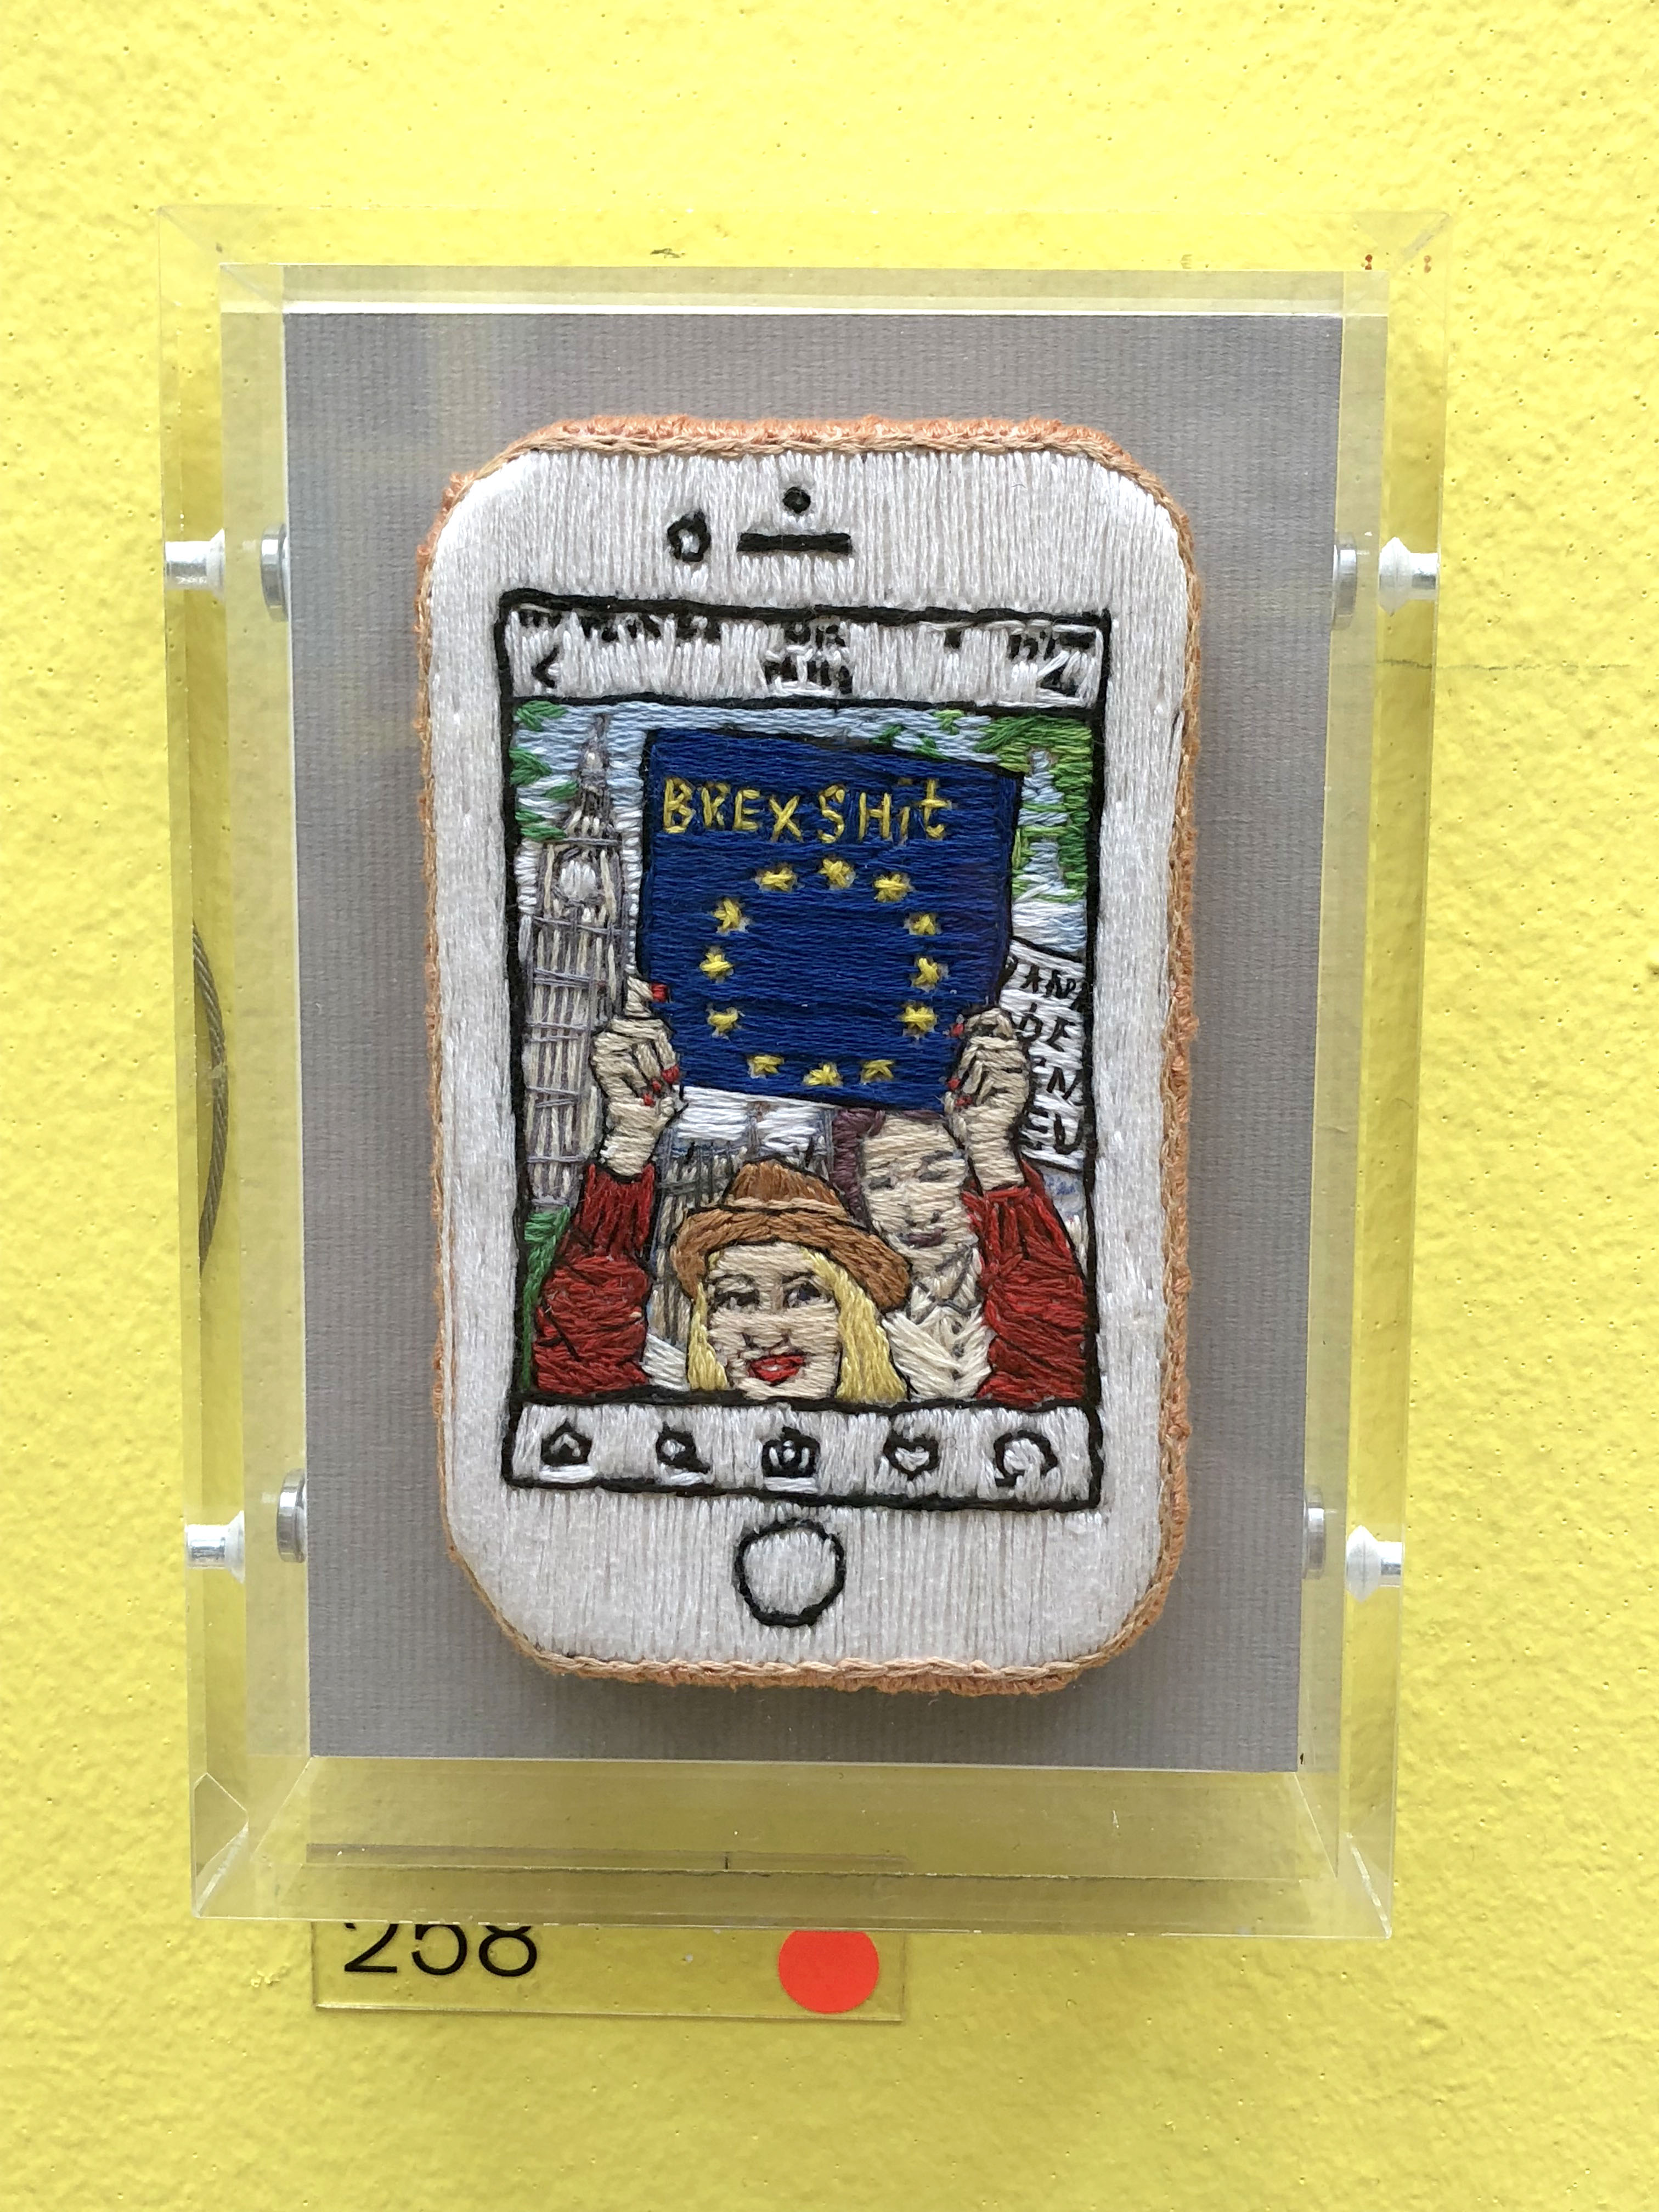 Royal Academy Summer Exhibition 2018 Brexshit Phone. Europe Running Through My Veins by Tisna Westerhof